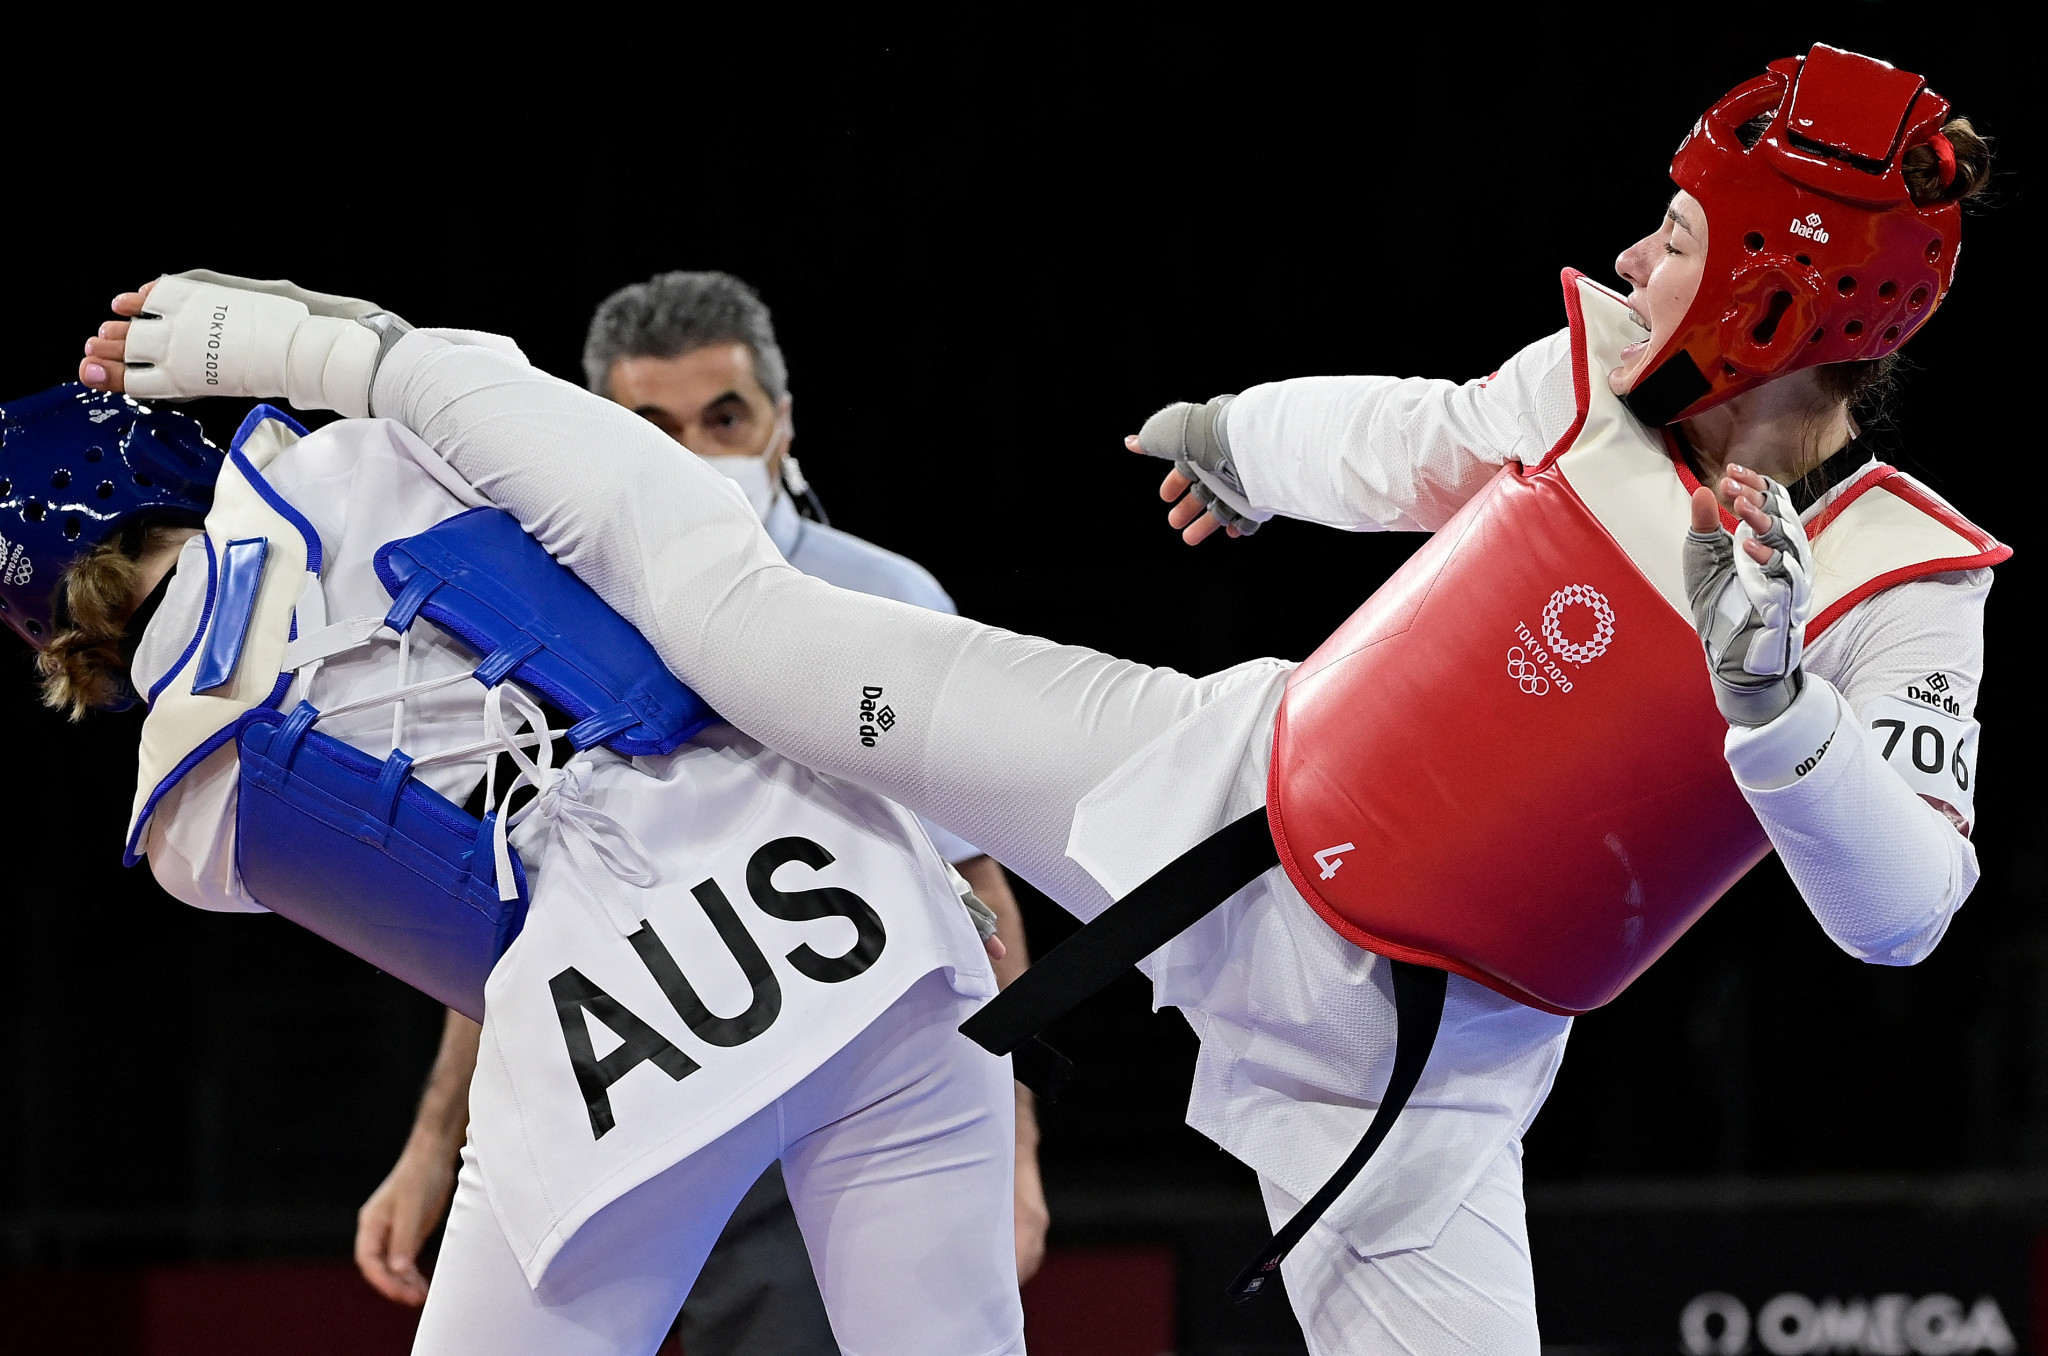 Jean Kfoury took over from Hassan Iskandar as Australian Taekwondo's new President last year ©Getty Images